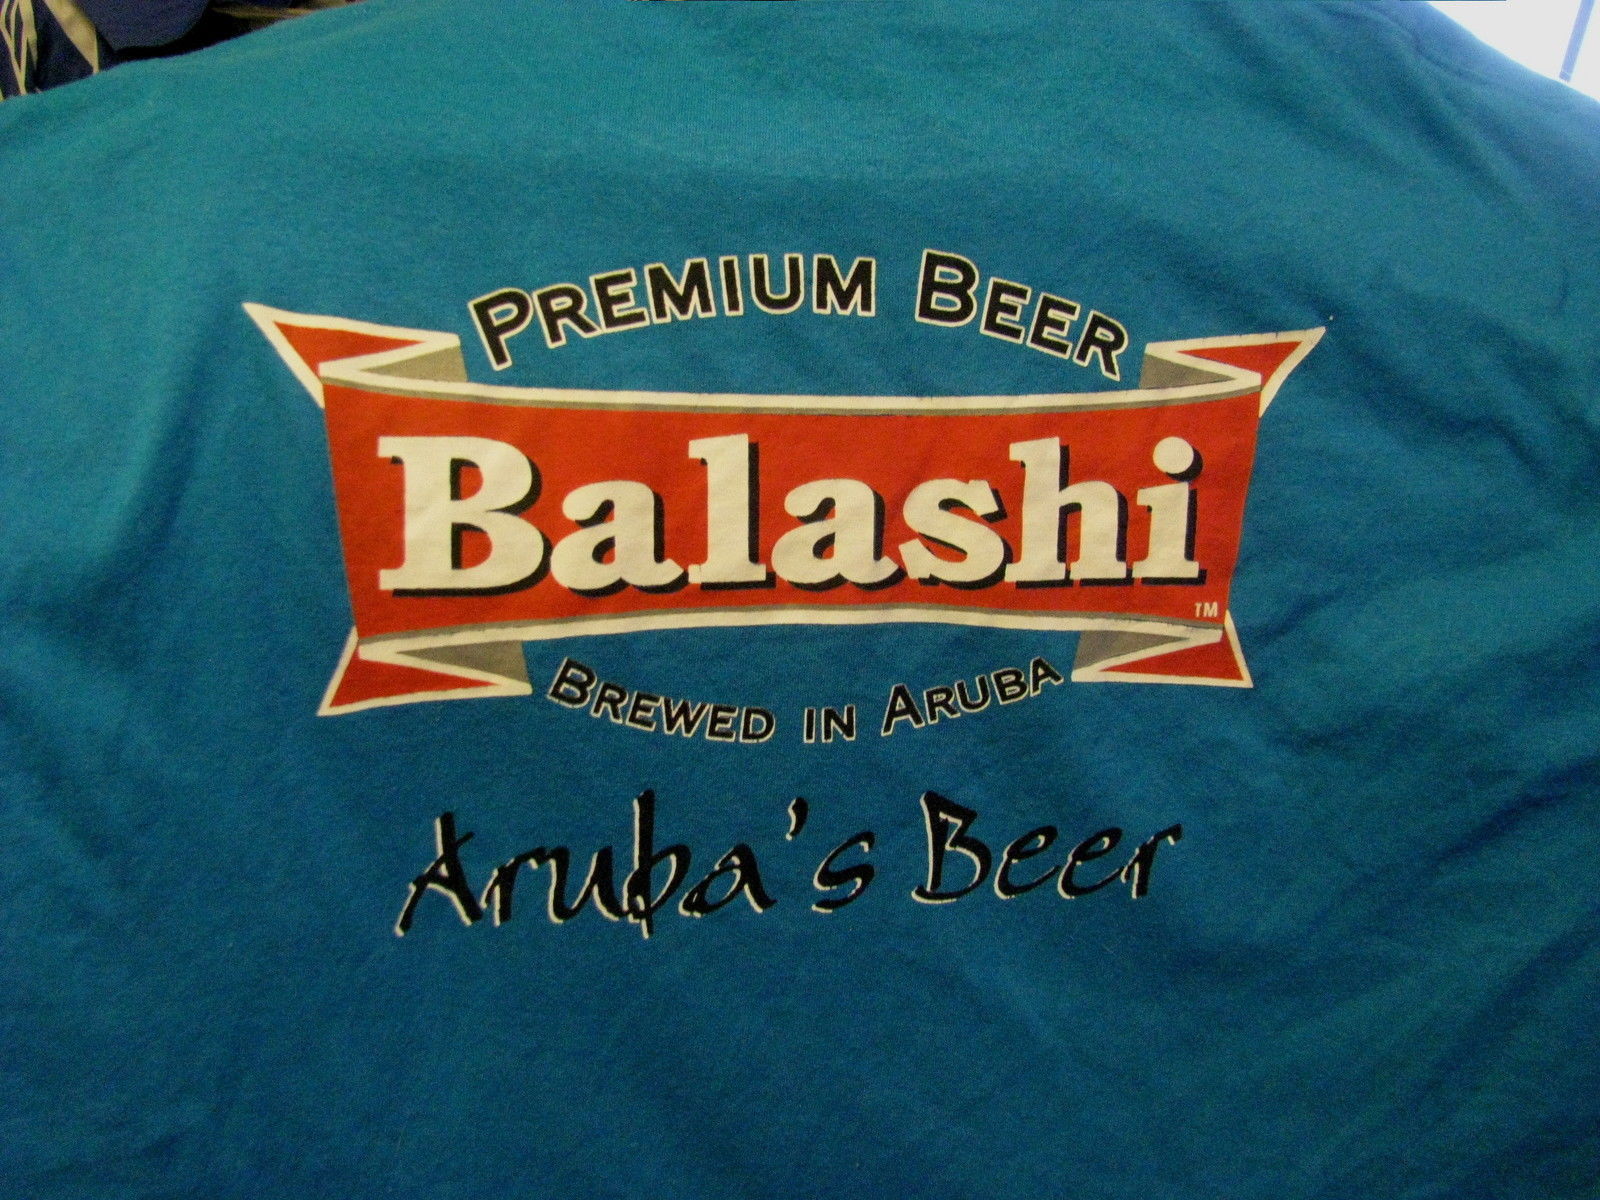 T-Shirt Balashi Premium Beer Brewed in Aruba Arubas Beer - T-Shirts ...